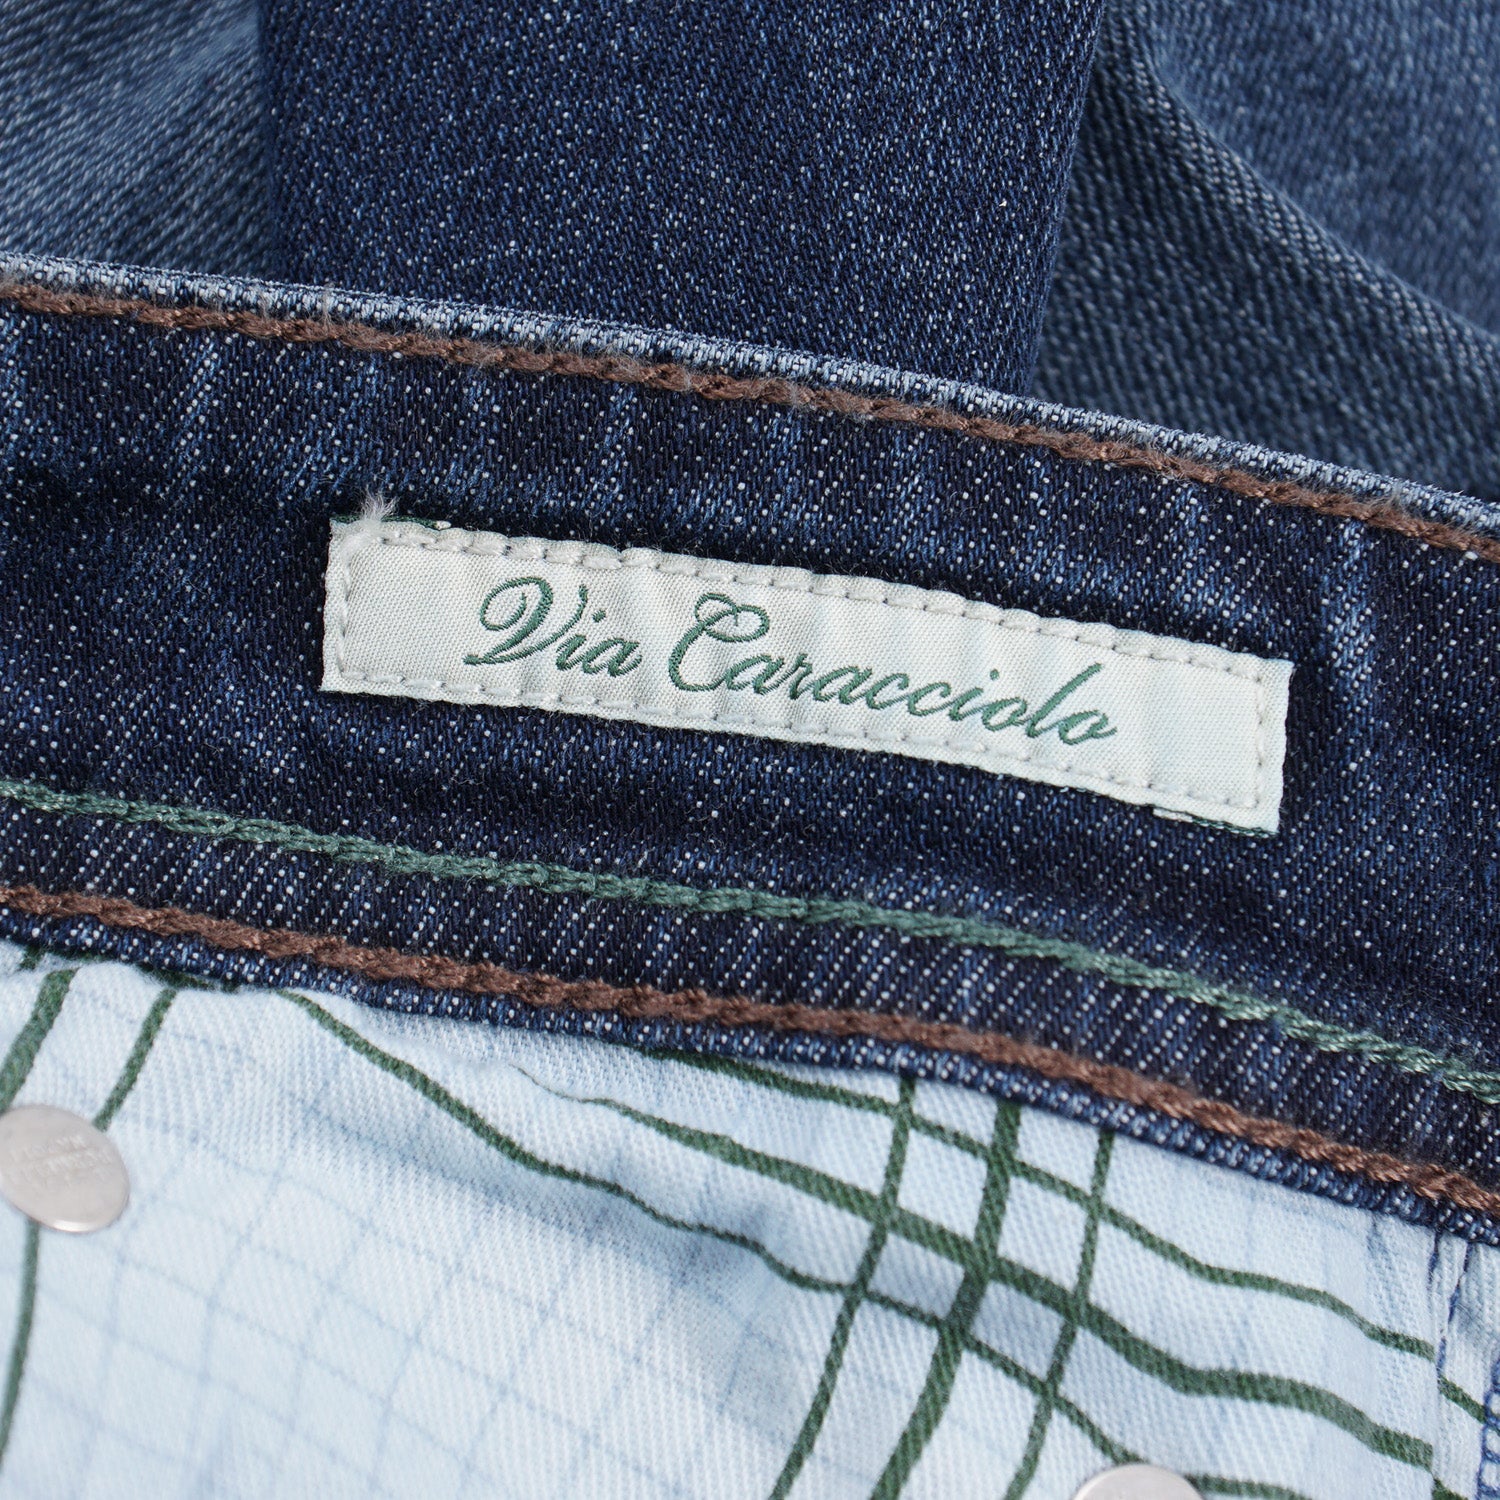 Luigi Borrelli Slim-Fit Denim Jeans - Top Shelf Apparel